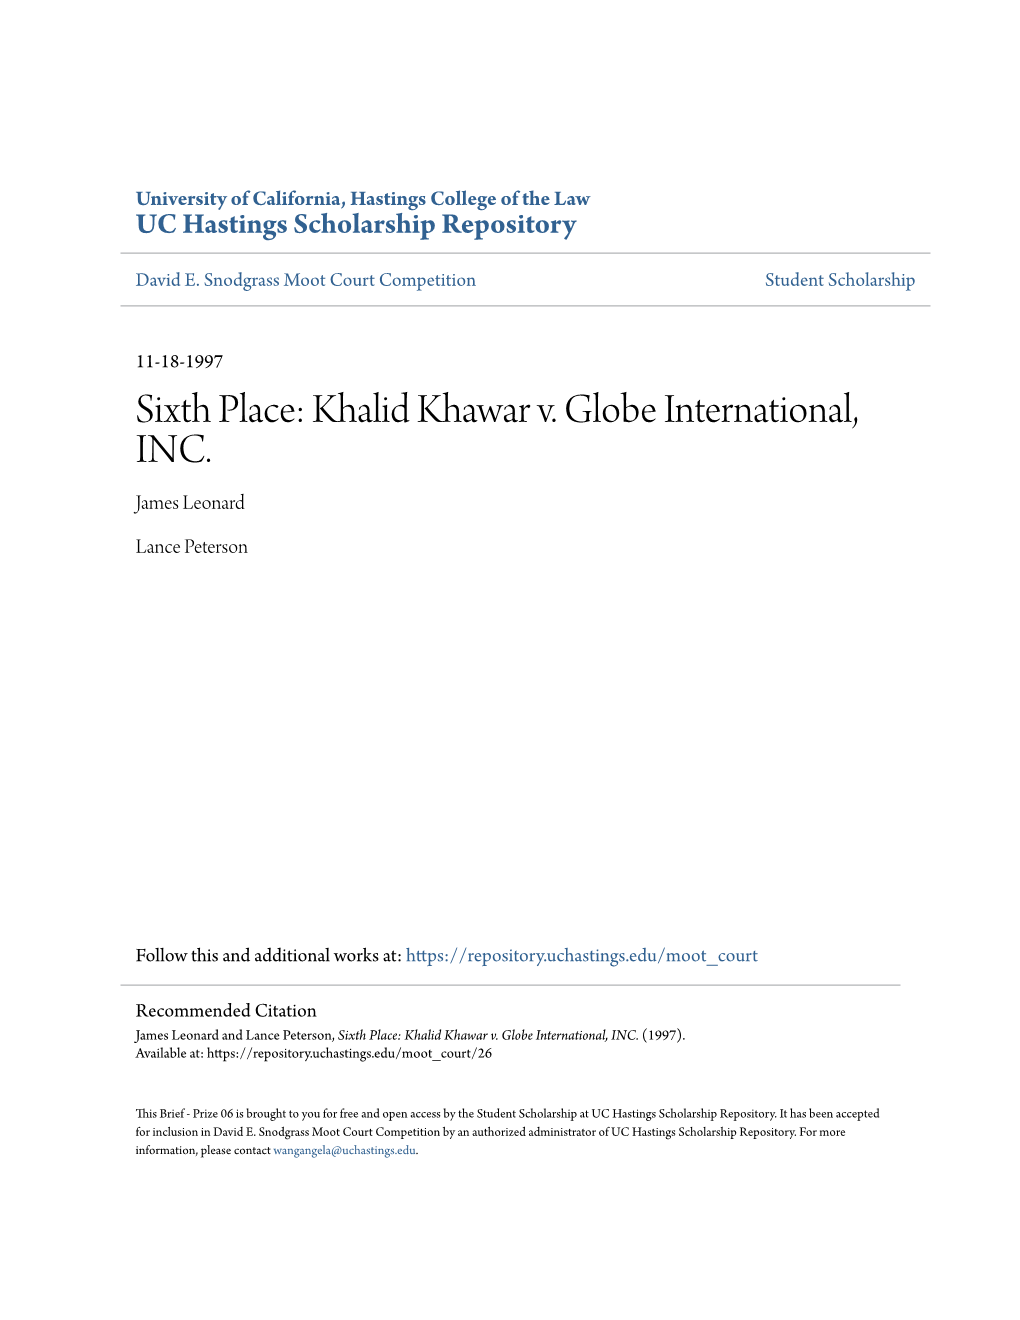 Sixth Place: Khalid Khawar V. Globe International, INC. James Leonard